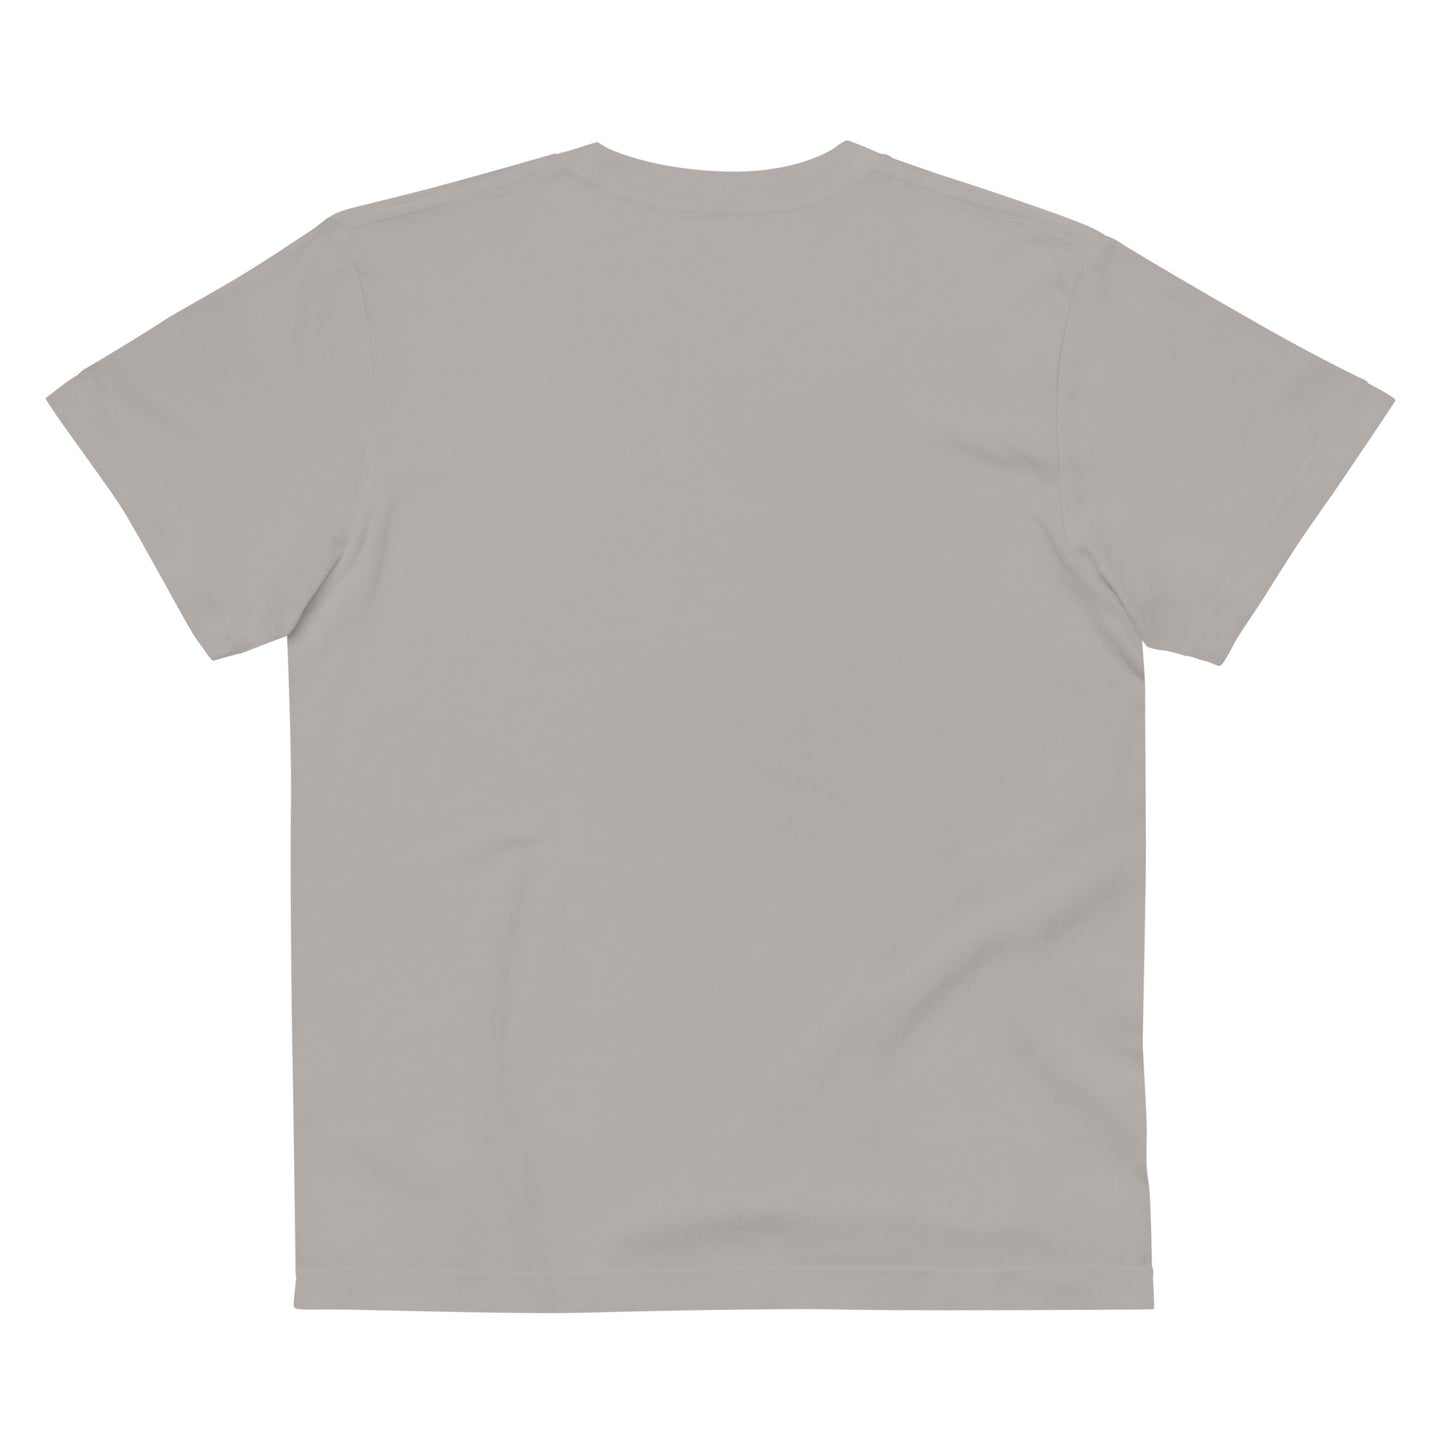 P011 - เสื้อยืดคอตตอนคุณภาพ (เตรียมตัว! : สีเทา/สีเทาชาร์โคล)